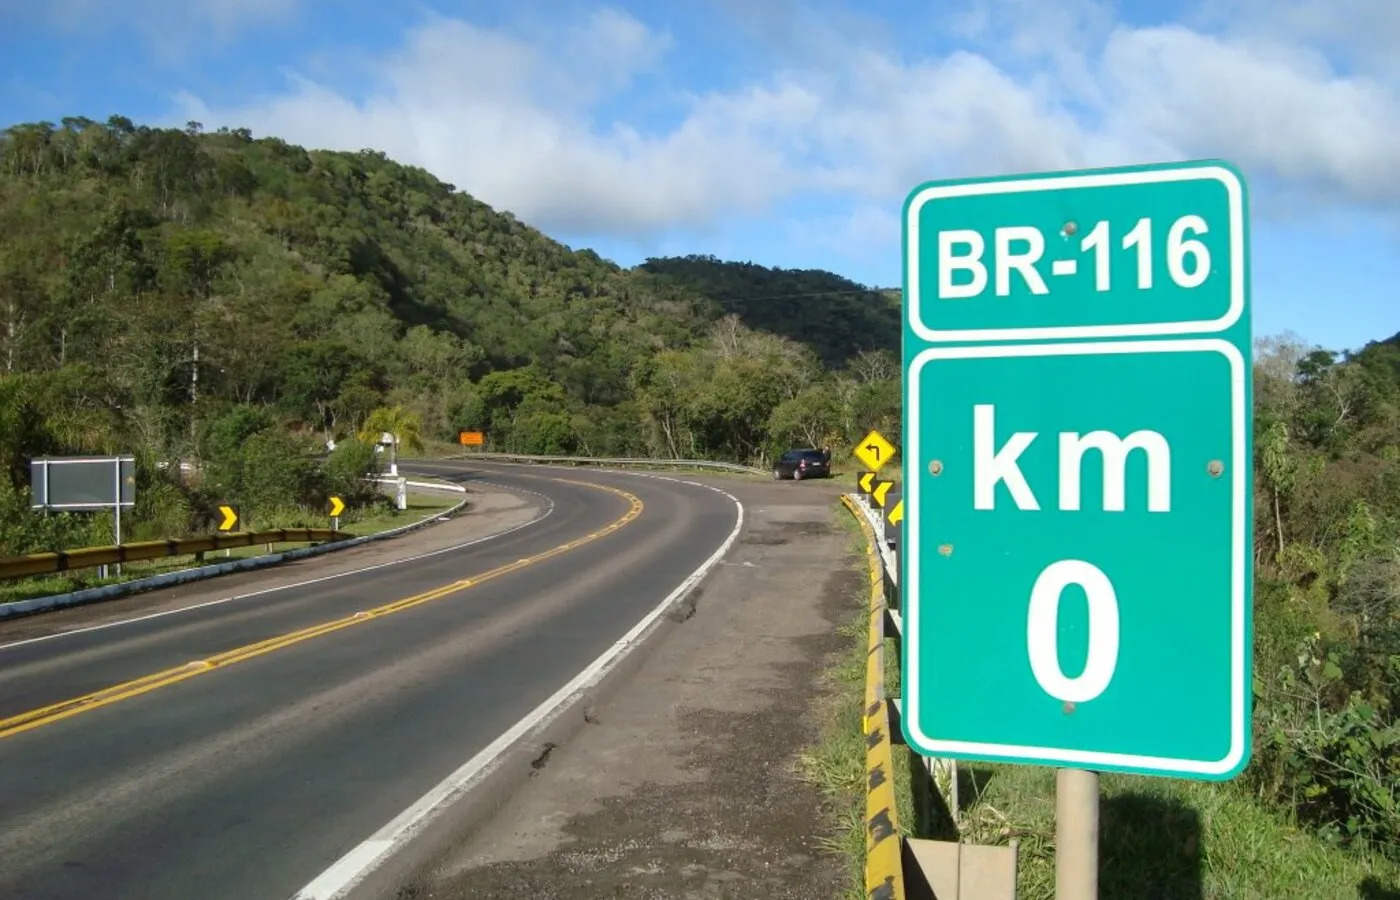 BR-230 - Km 0 – Foto de Rodovia Transamazônica, Cabedelo - Tripadvisor